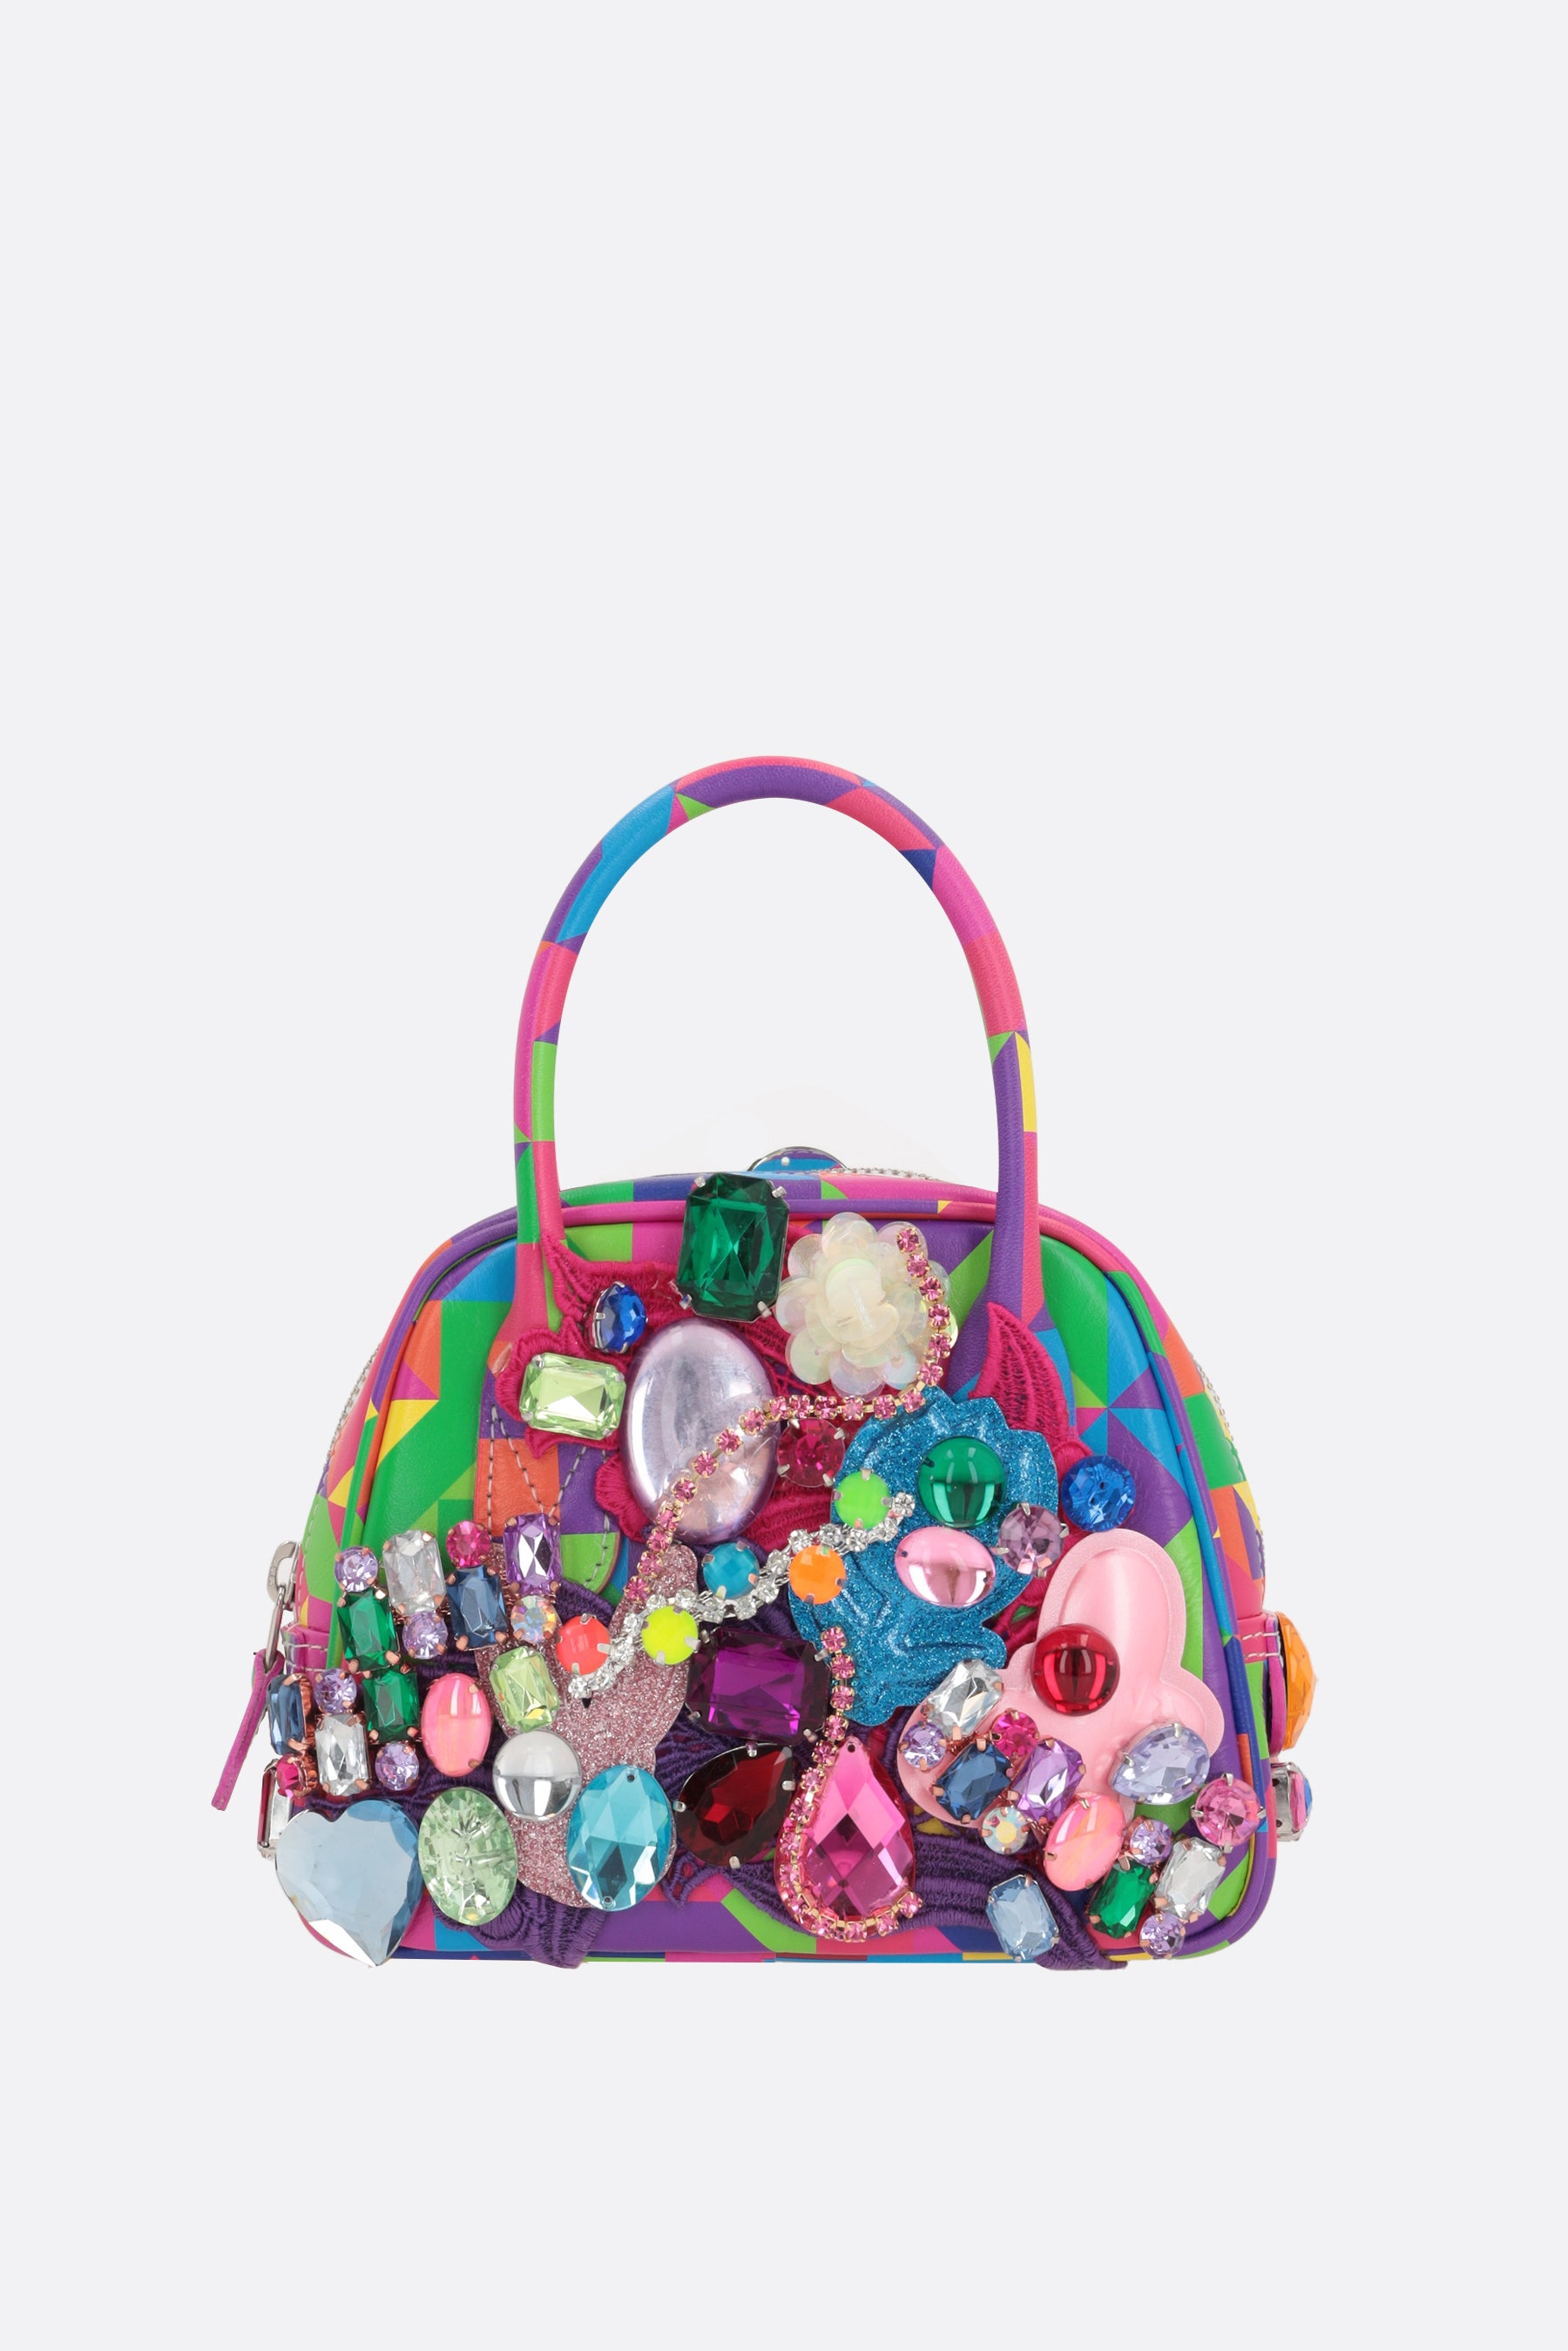 smooth leather handbag with embellishments